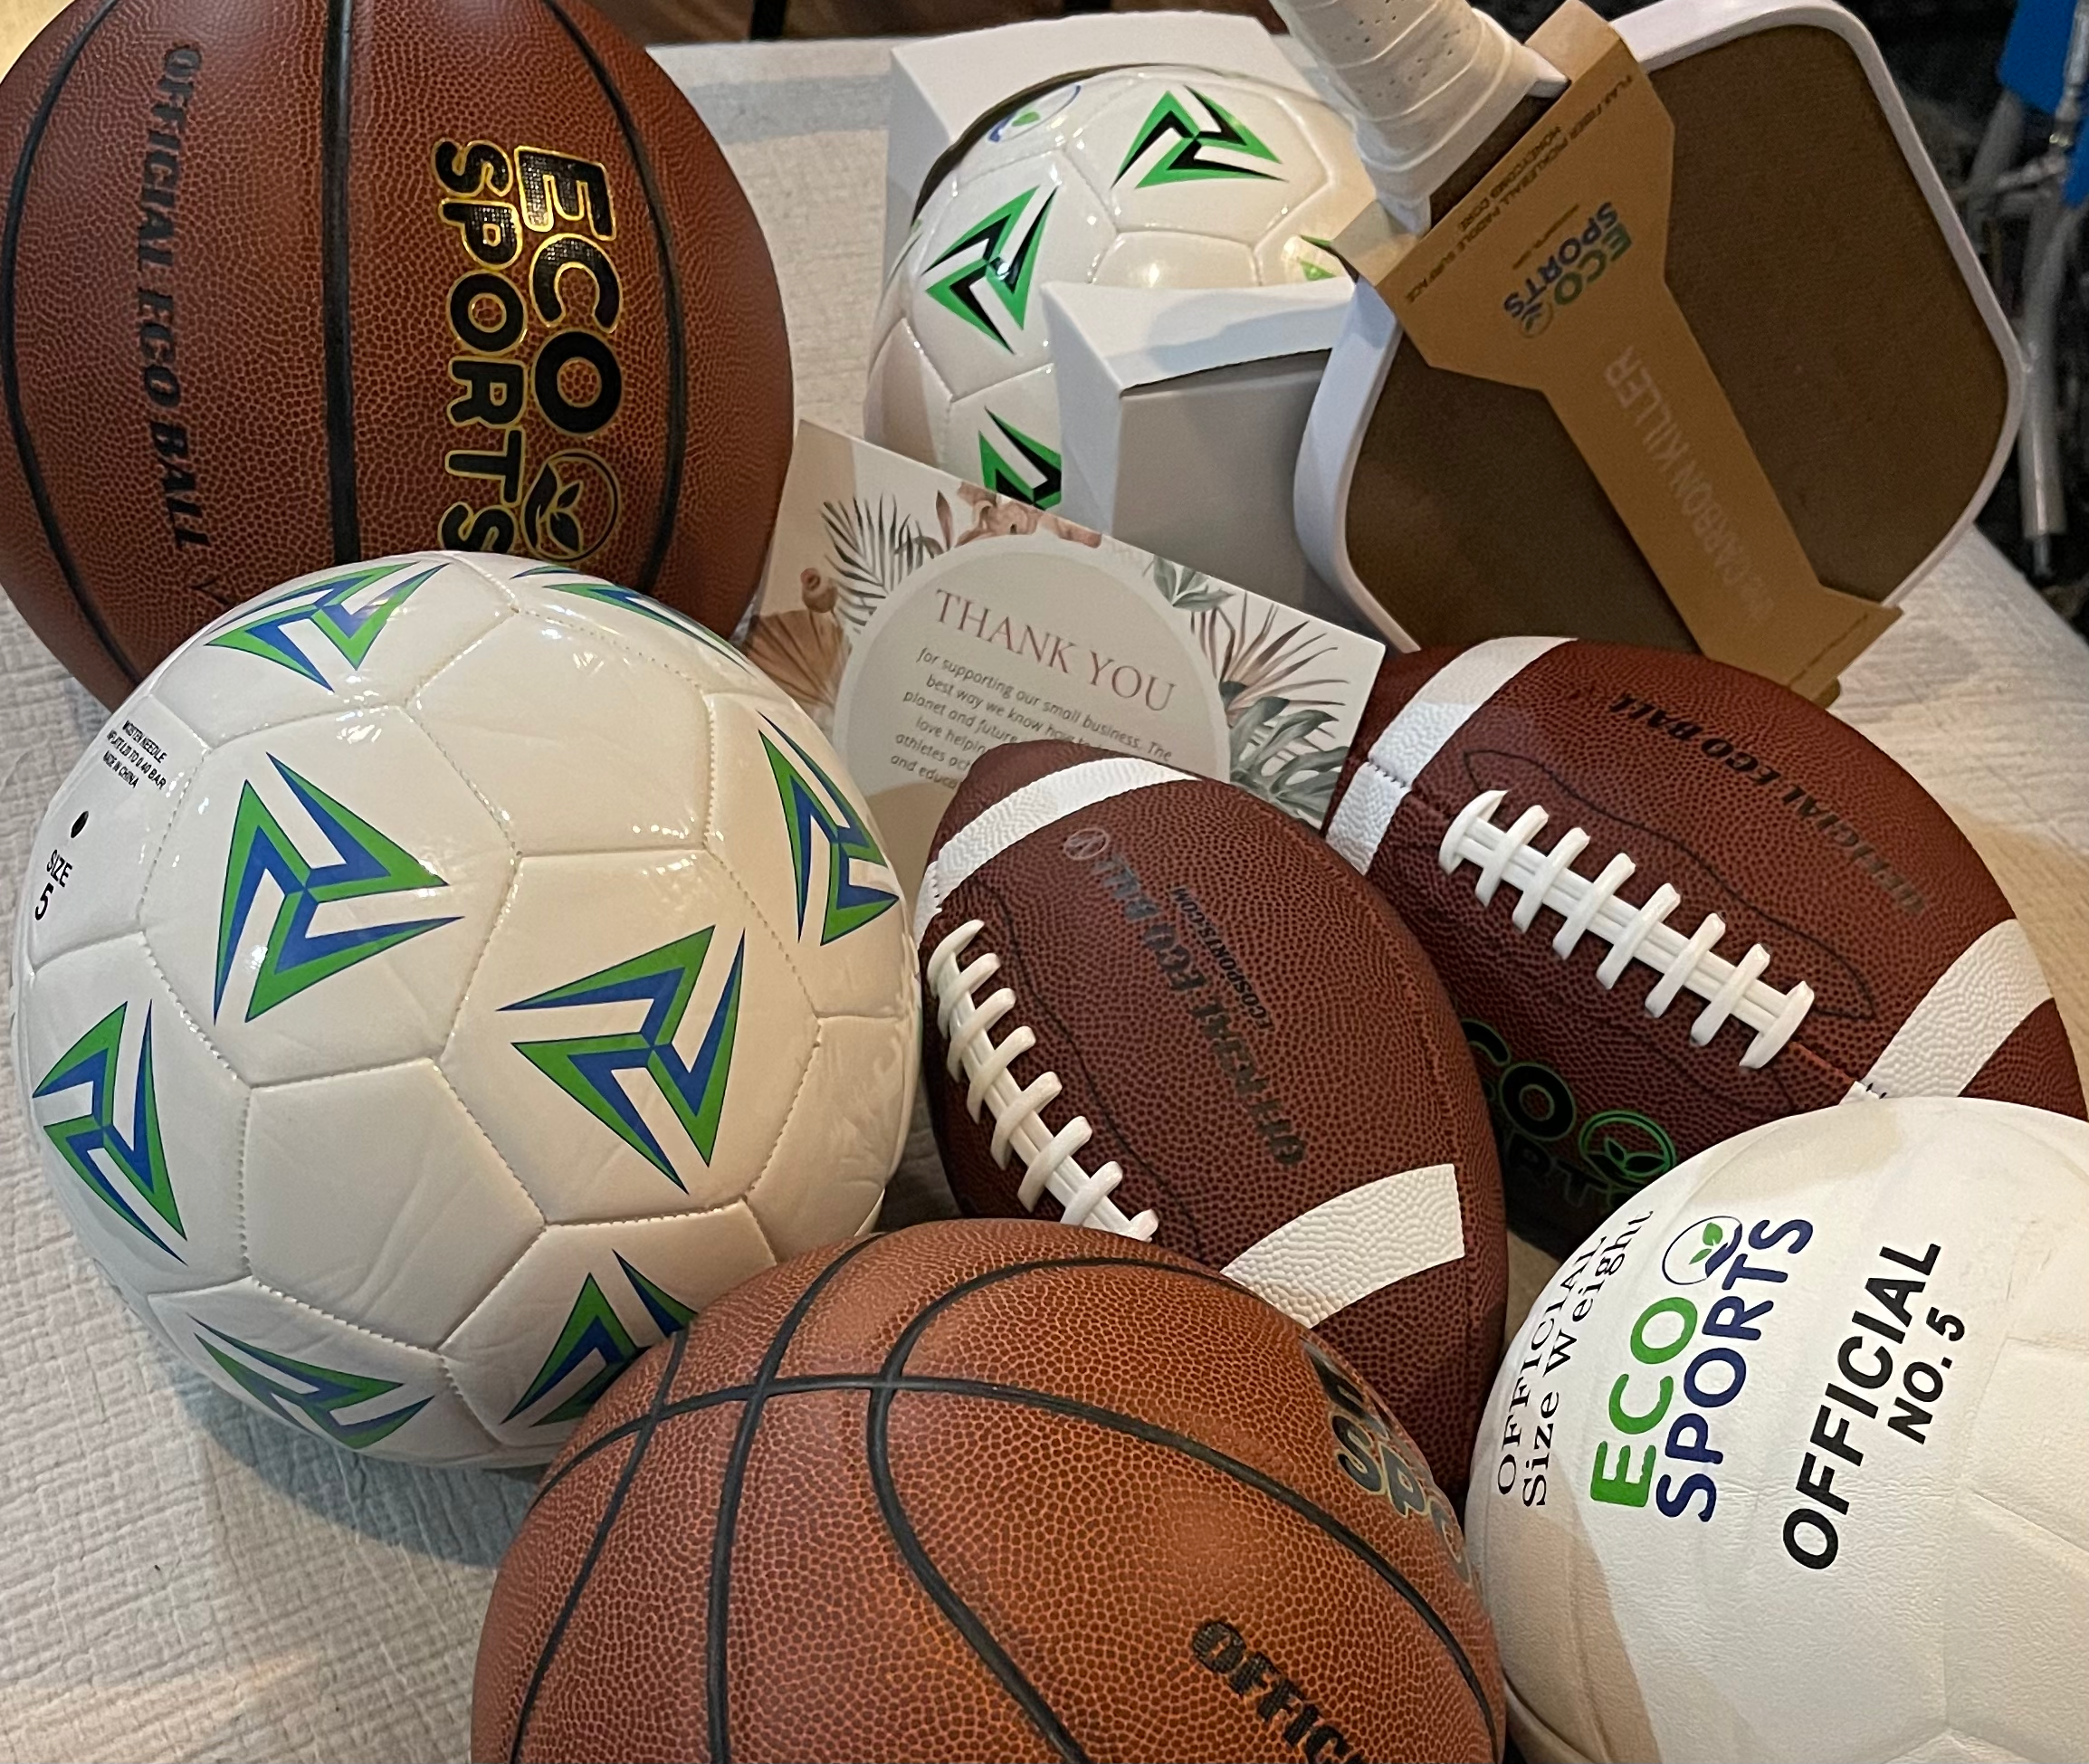 Eco Sports Holiday Gifts Collection - Basketballs, Soccer Balls, Footballs, Pickleball Paddles